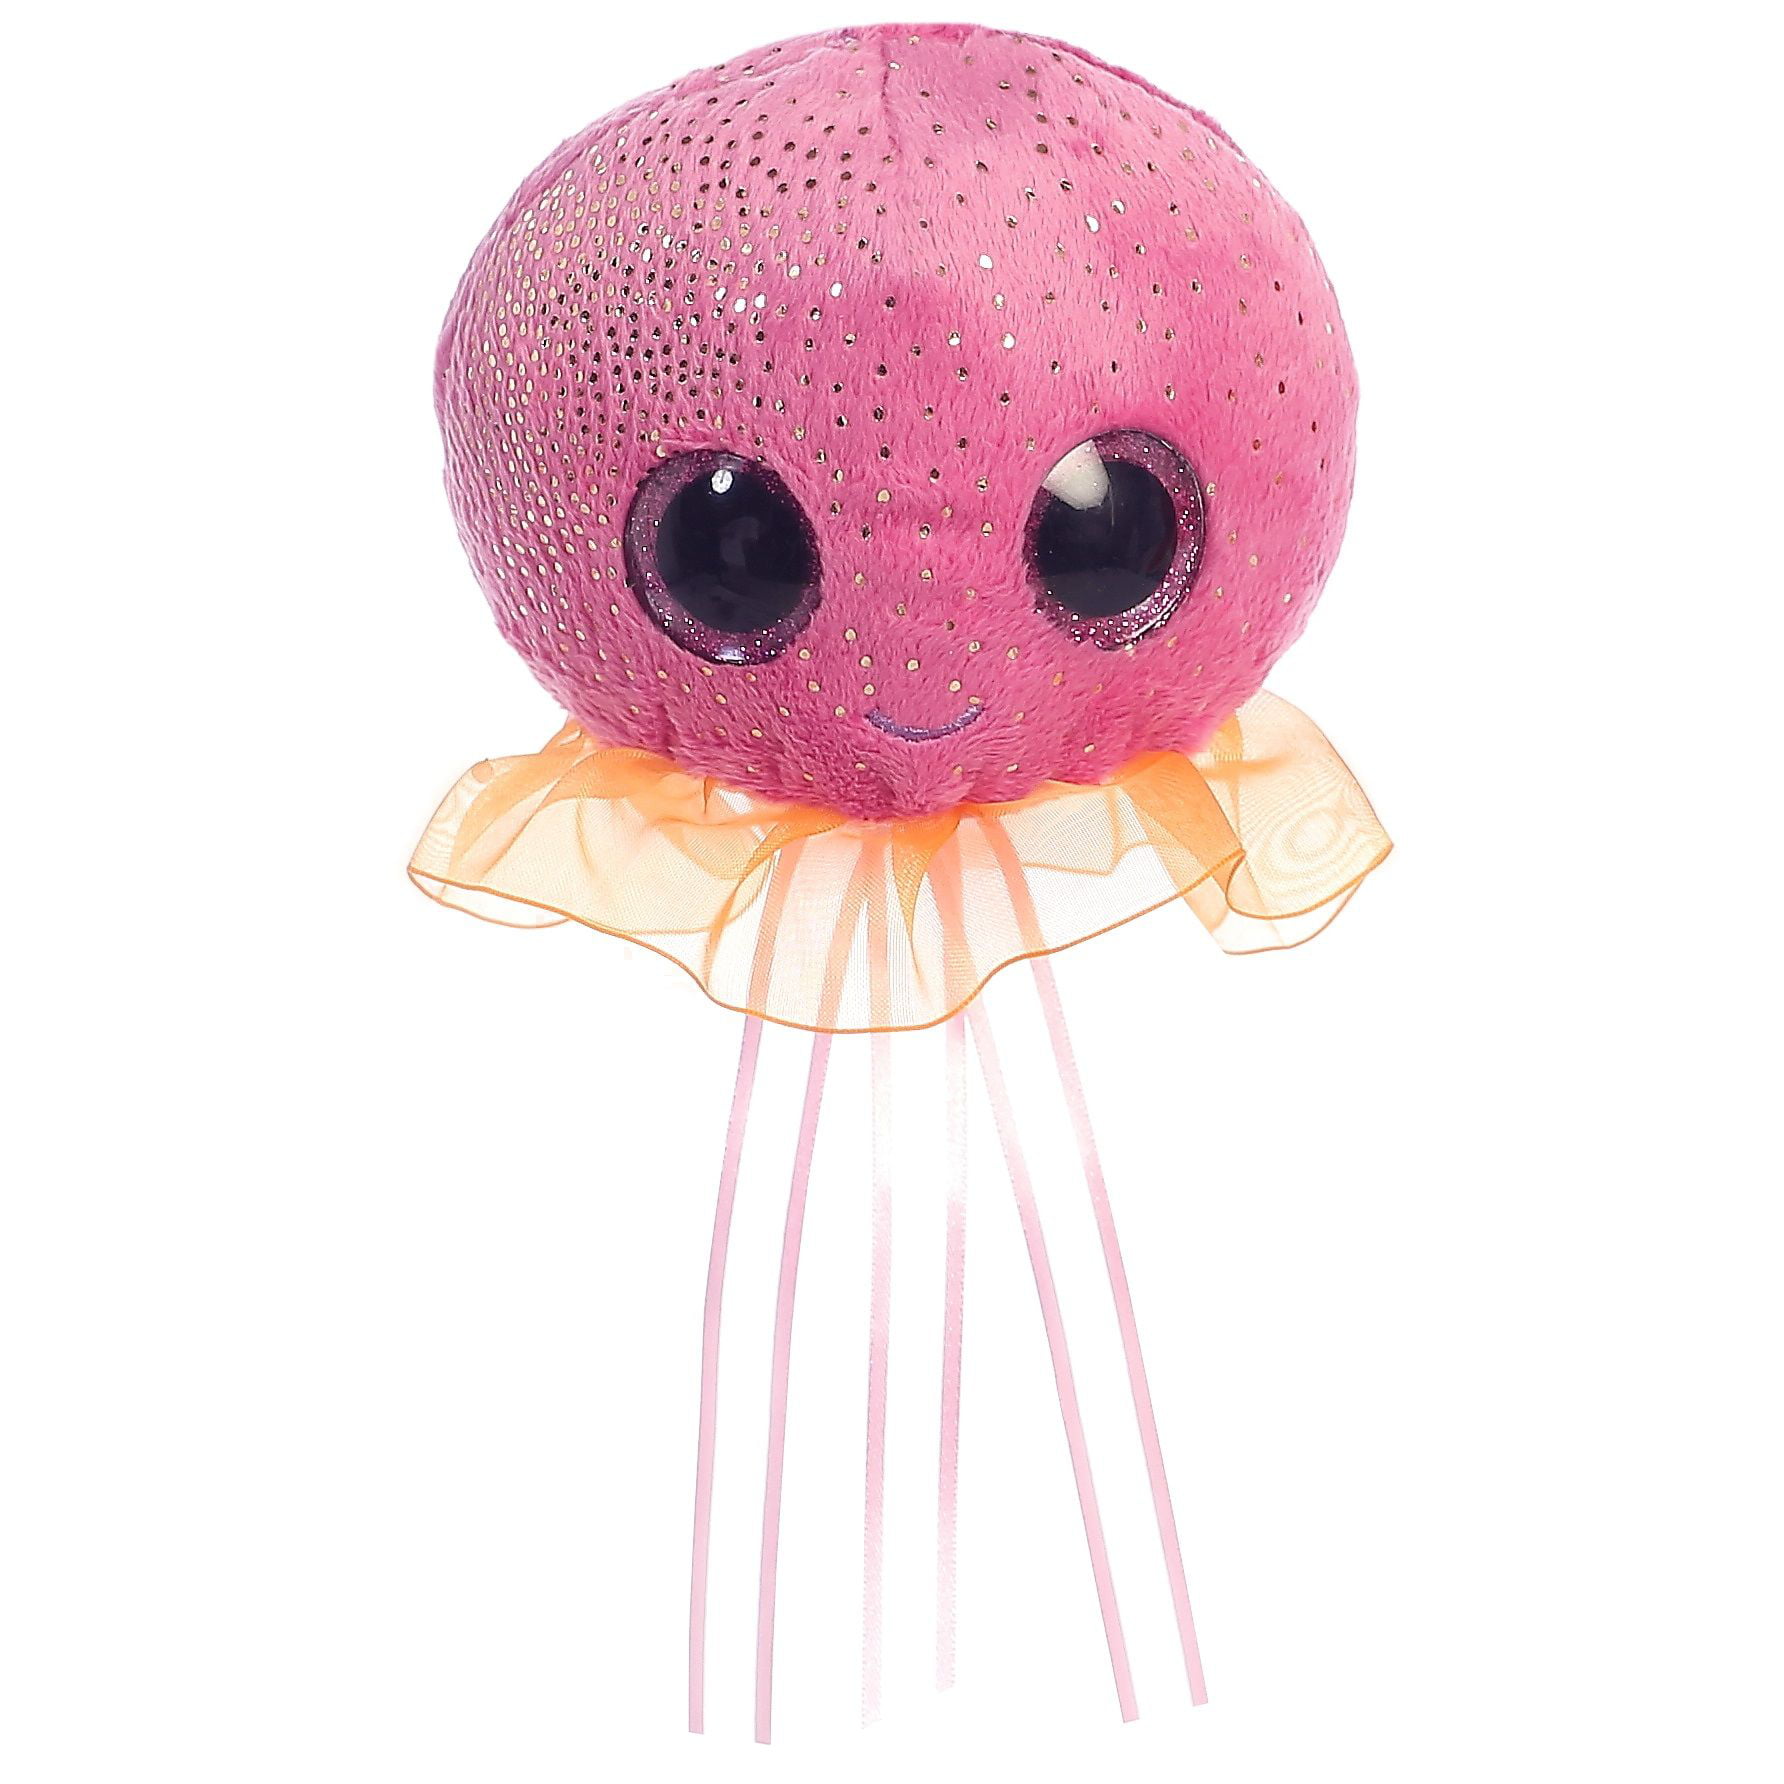 jellyfish stuffed animal brand